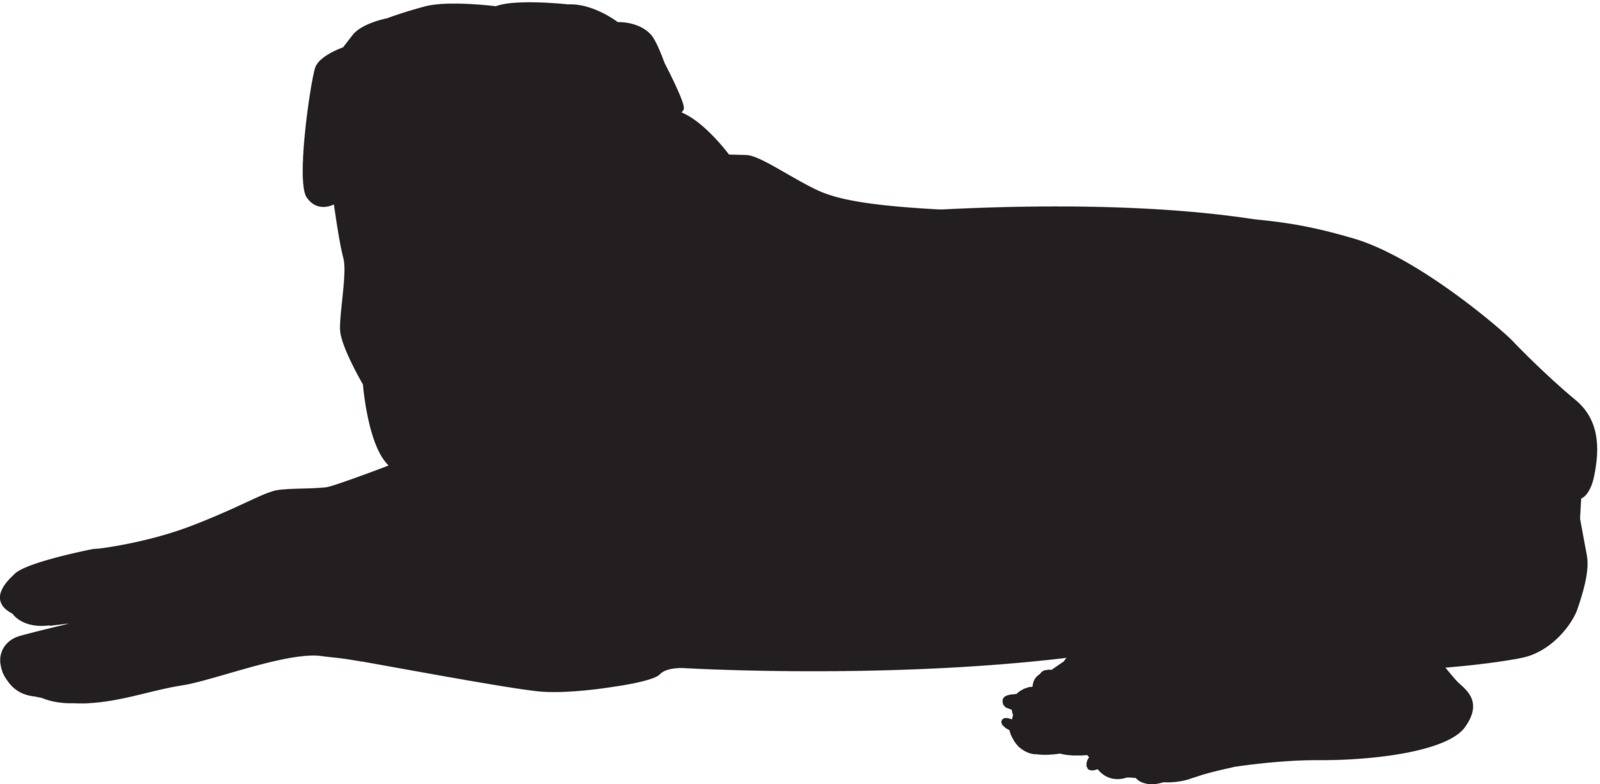 Dog silhouette by yurka